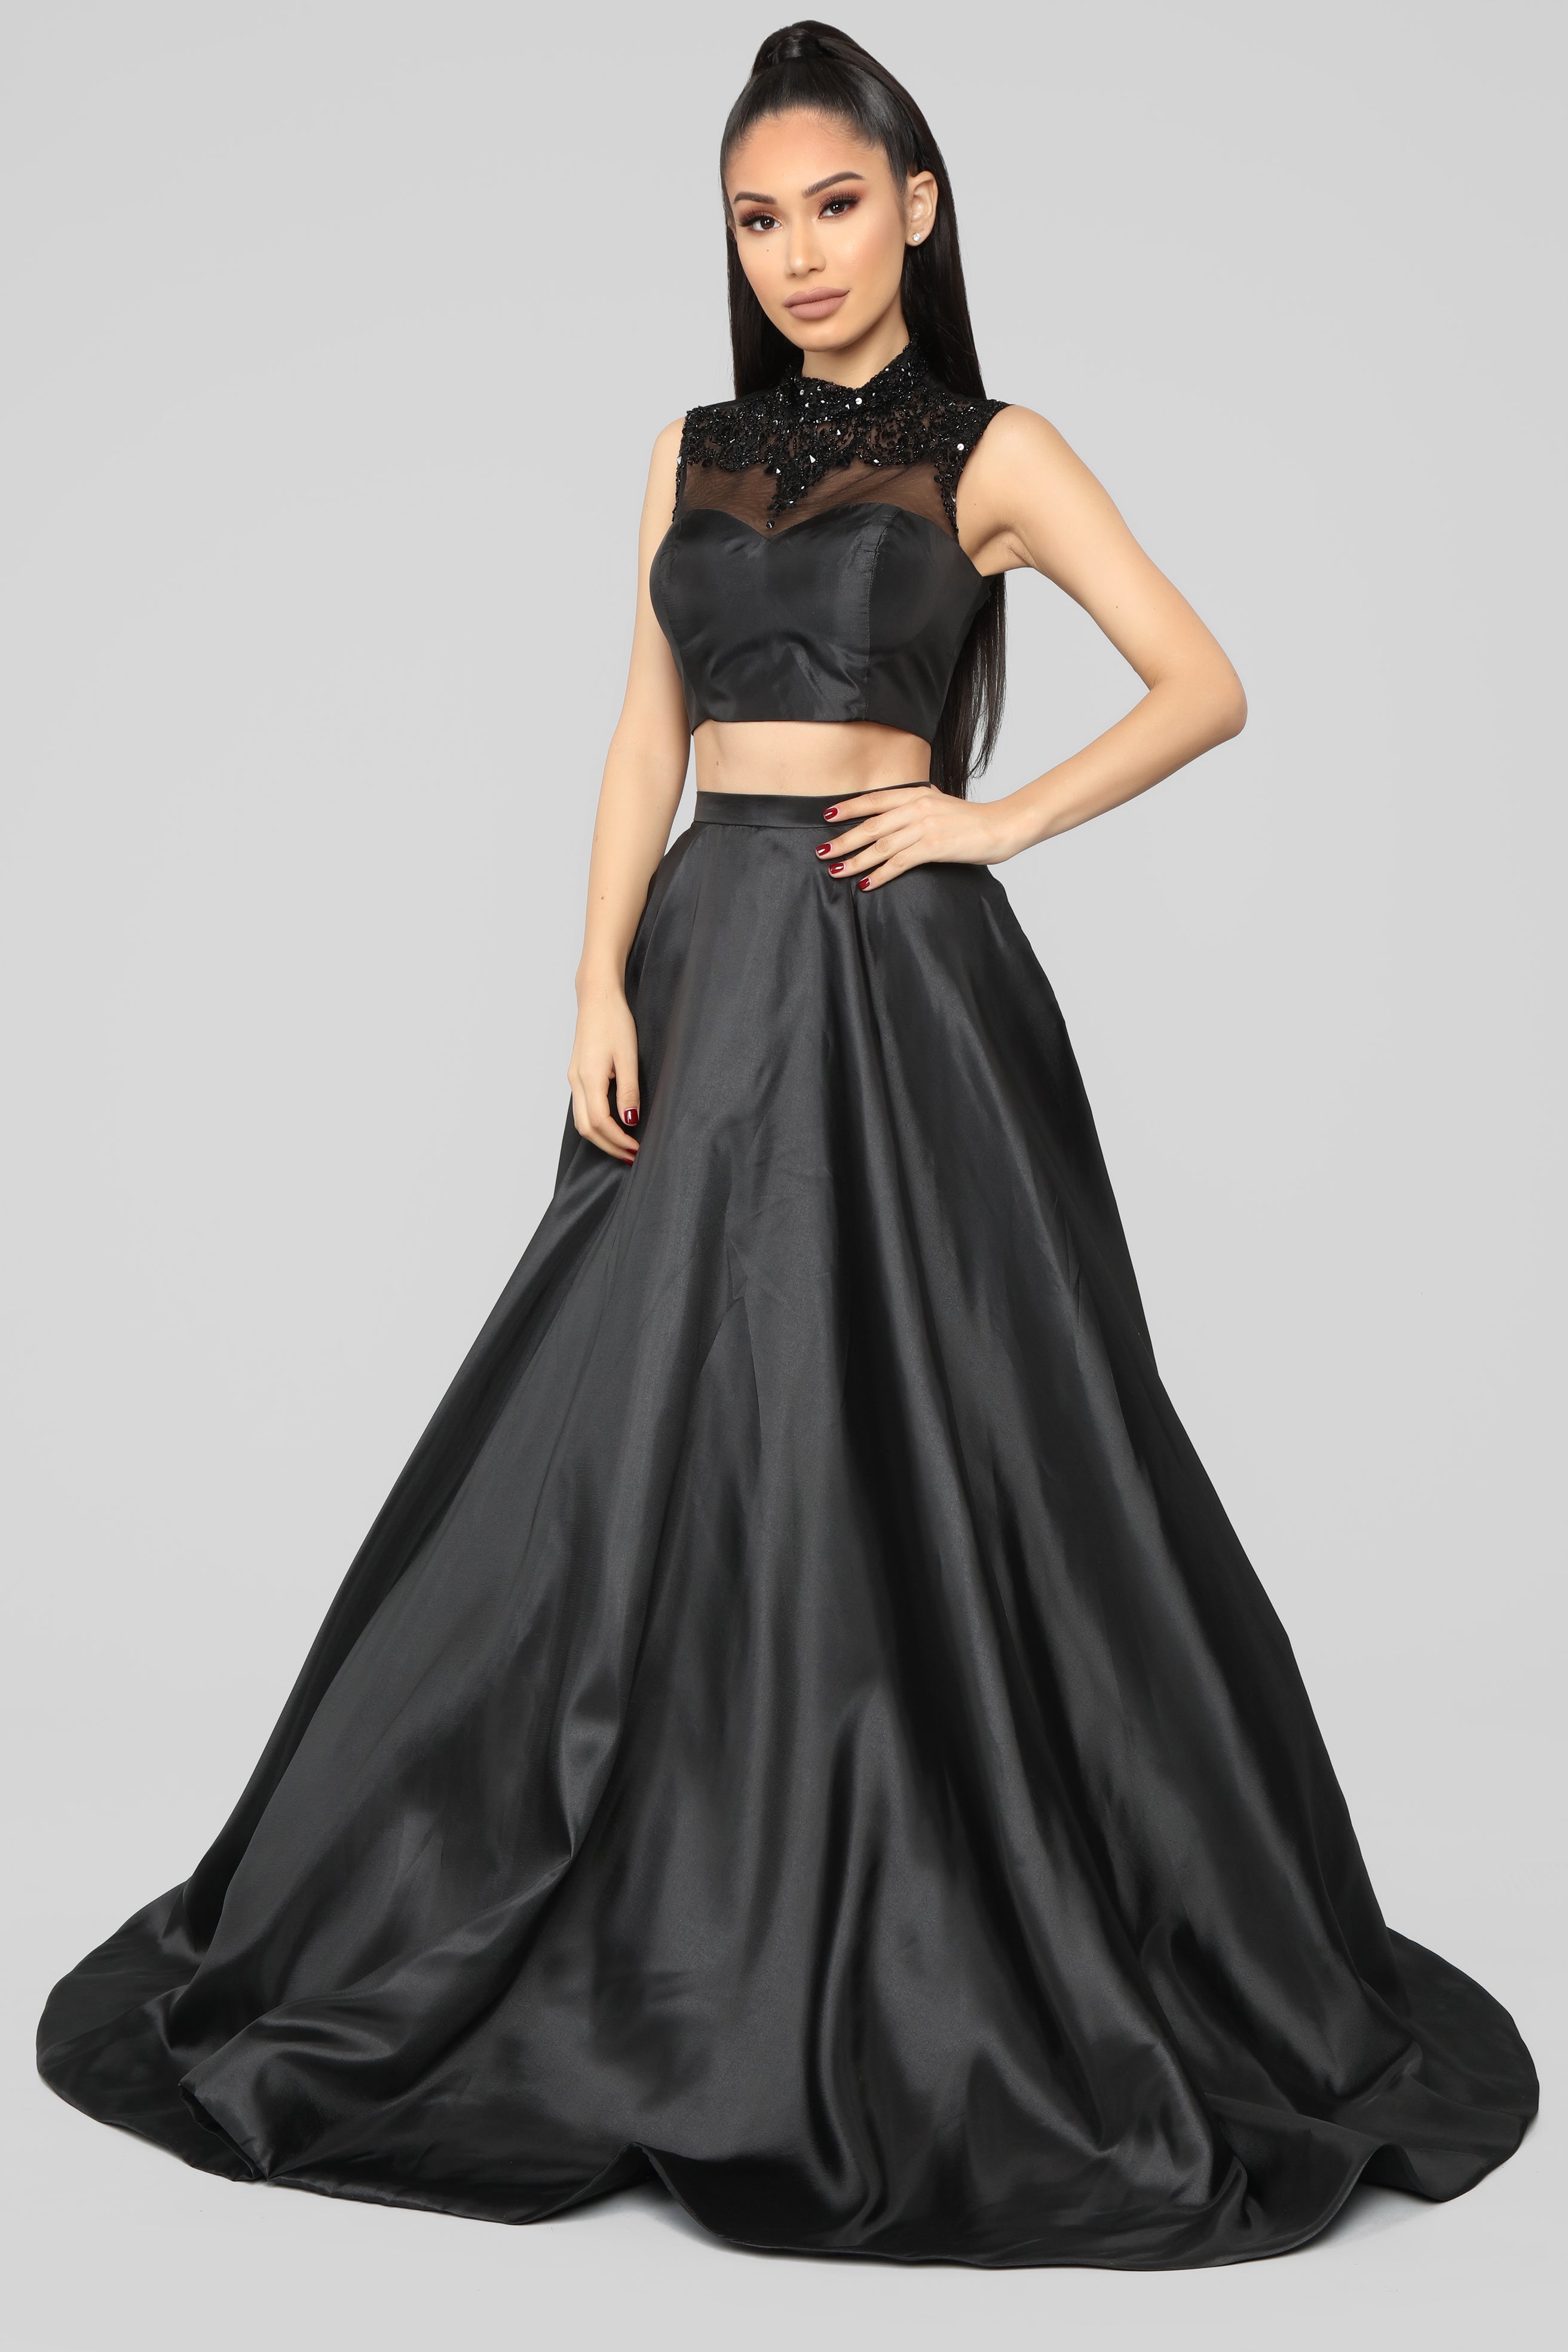 Fashion Nova - BRAND NEW FASHIONNOVA BURGUNDY BALL DRESS SATIN SIZE SMALL  on Designer Wardrobe